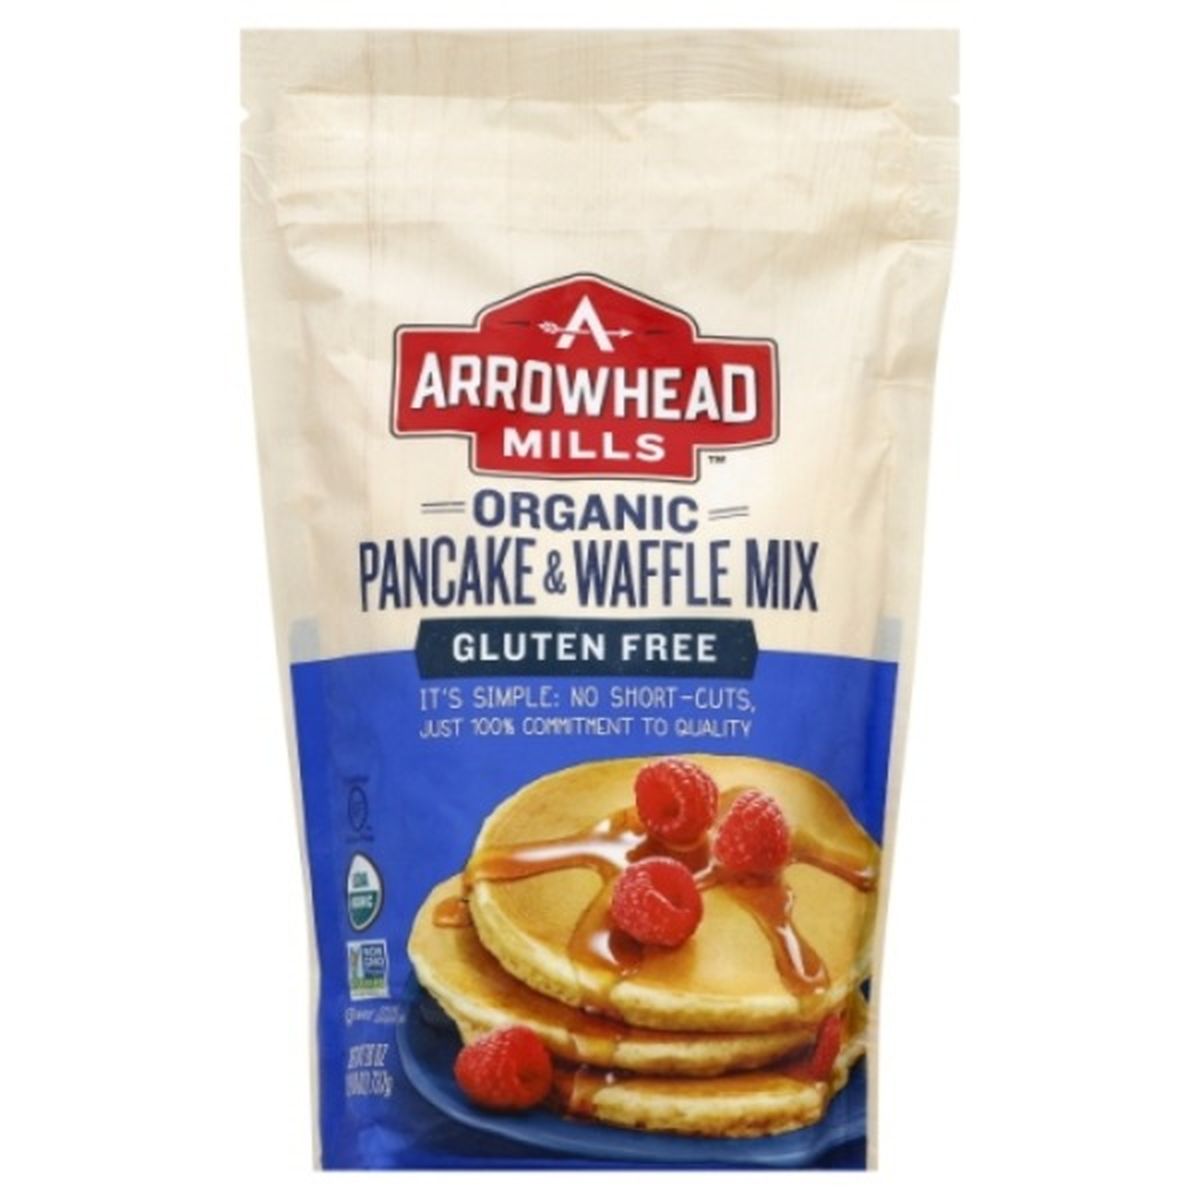 Calories in Arrowhead Mills Pancake & Waffle Mix, Organic, Gluten Free